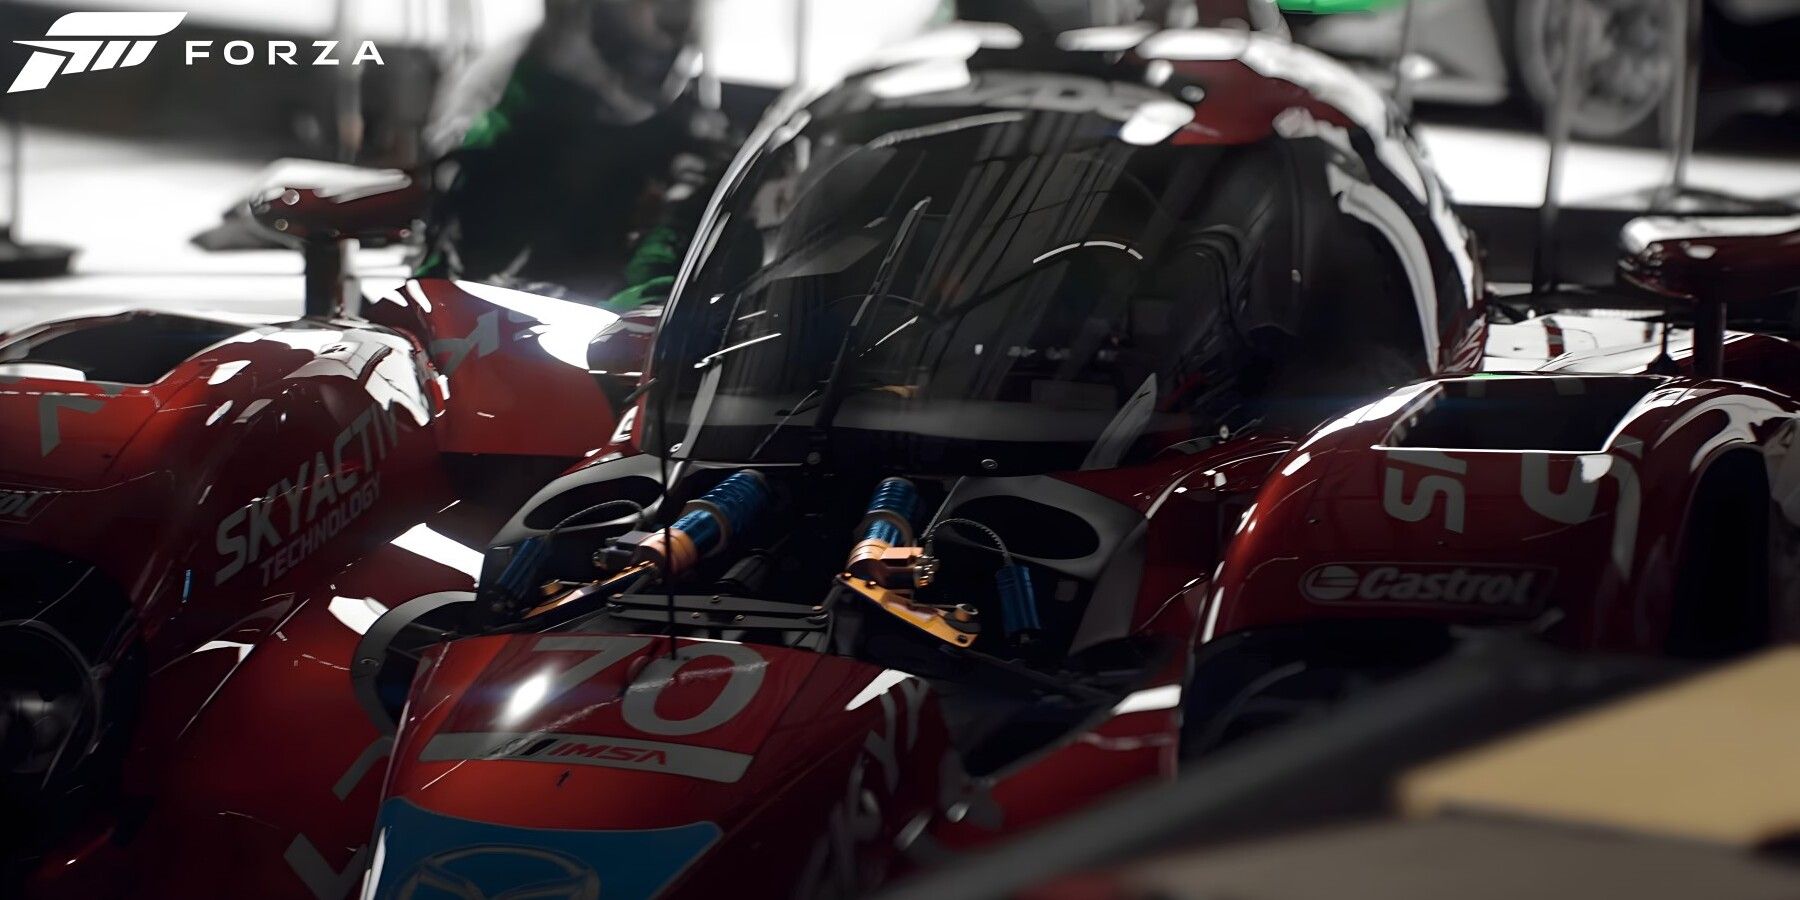 Forza-Motorsport-Cutscene-Объявление-Официальное